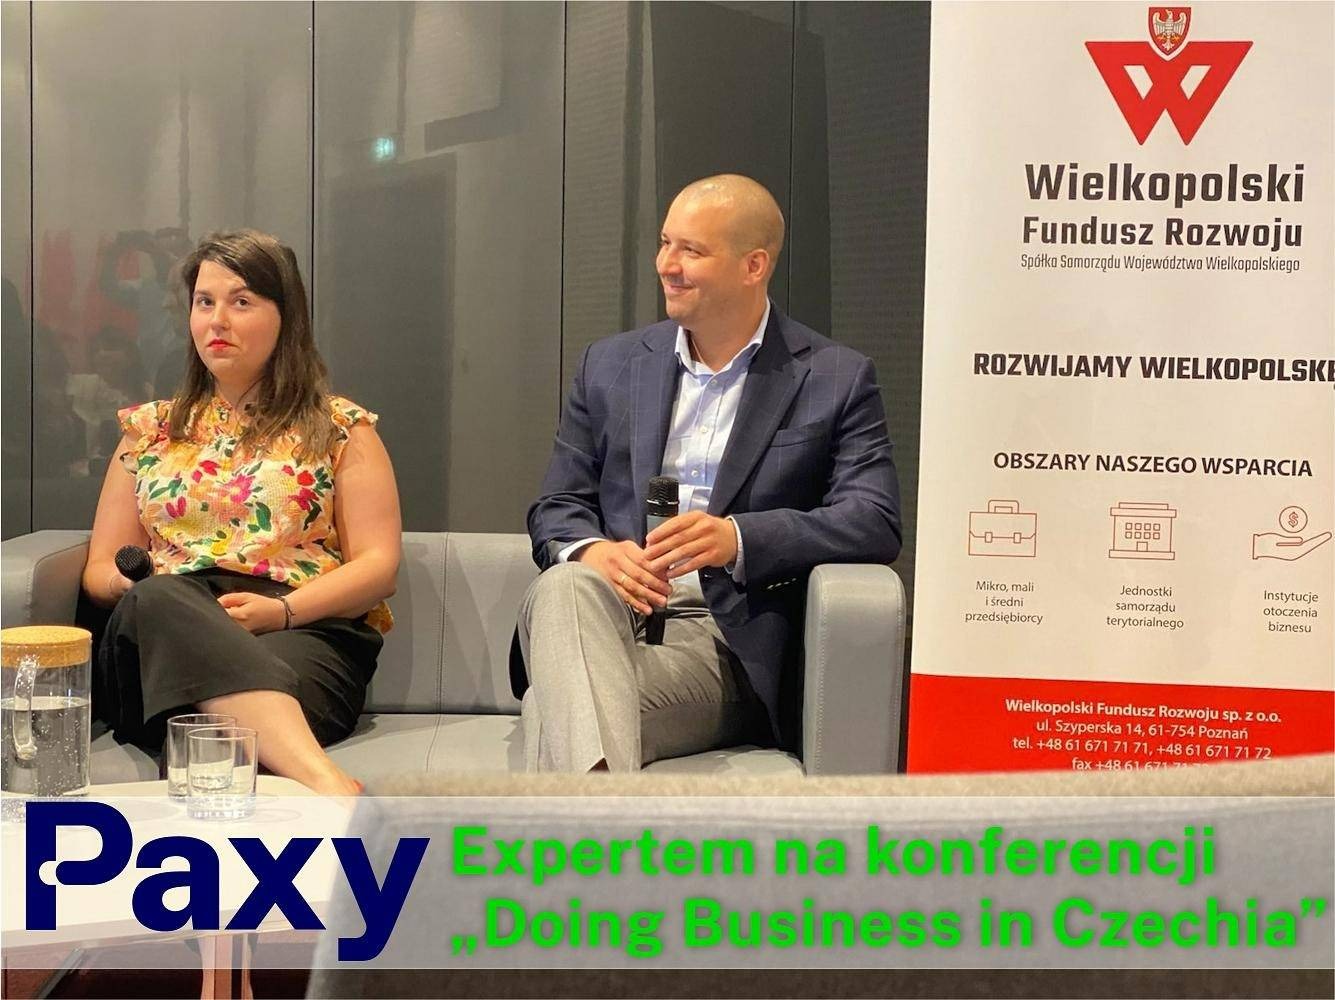 Paxy expertem na konferencji „Doing Business in Czechia”